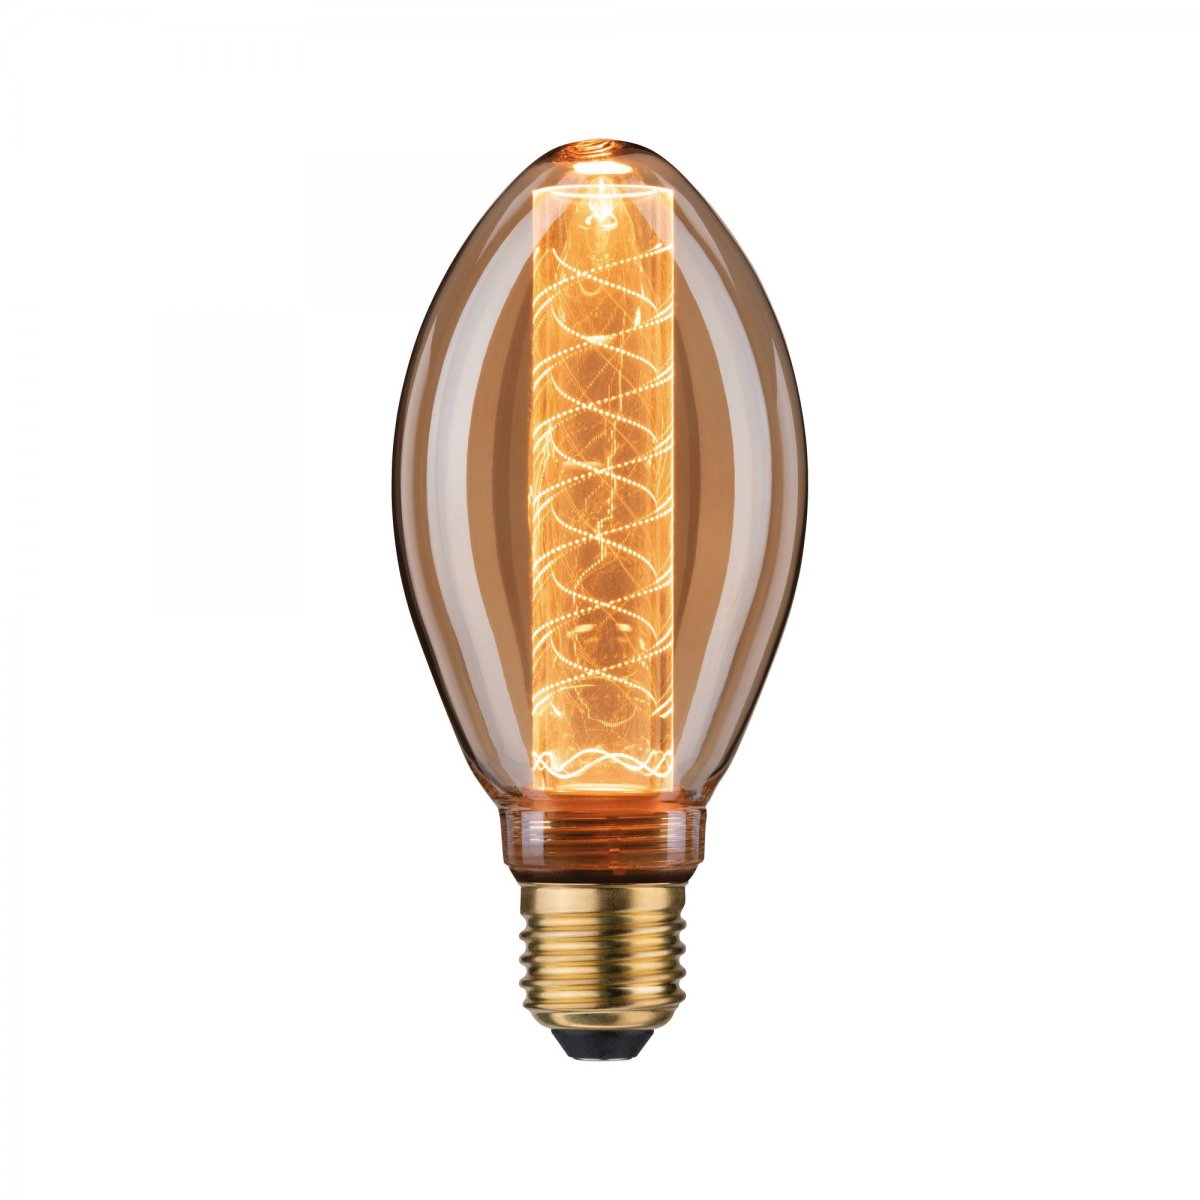 Glow online B75 Leuchten --> E27 Vintage-Birne & dimmbar Lampen LED Paulmann Gold Spiralmuster No. 28827 kaufen Inner